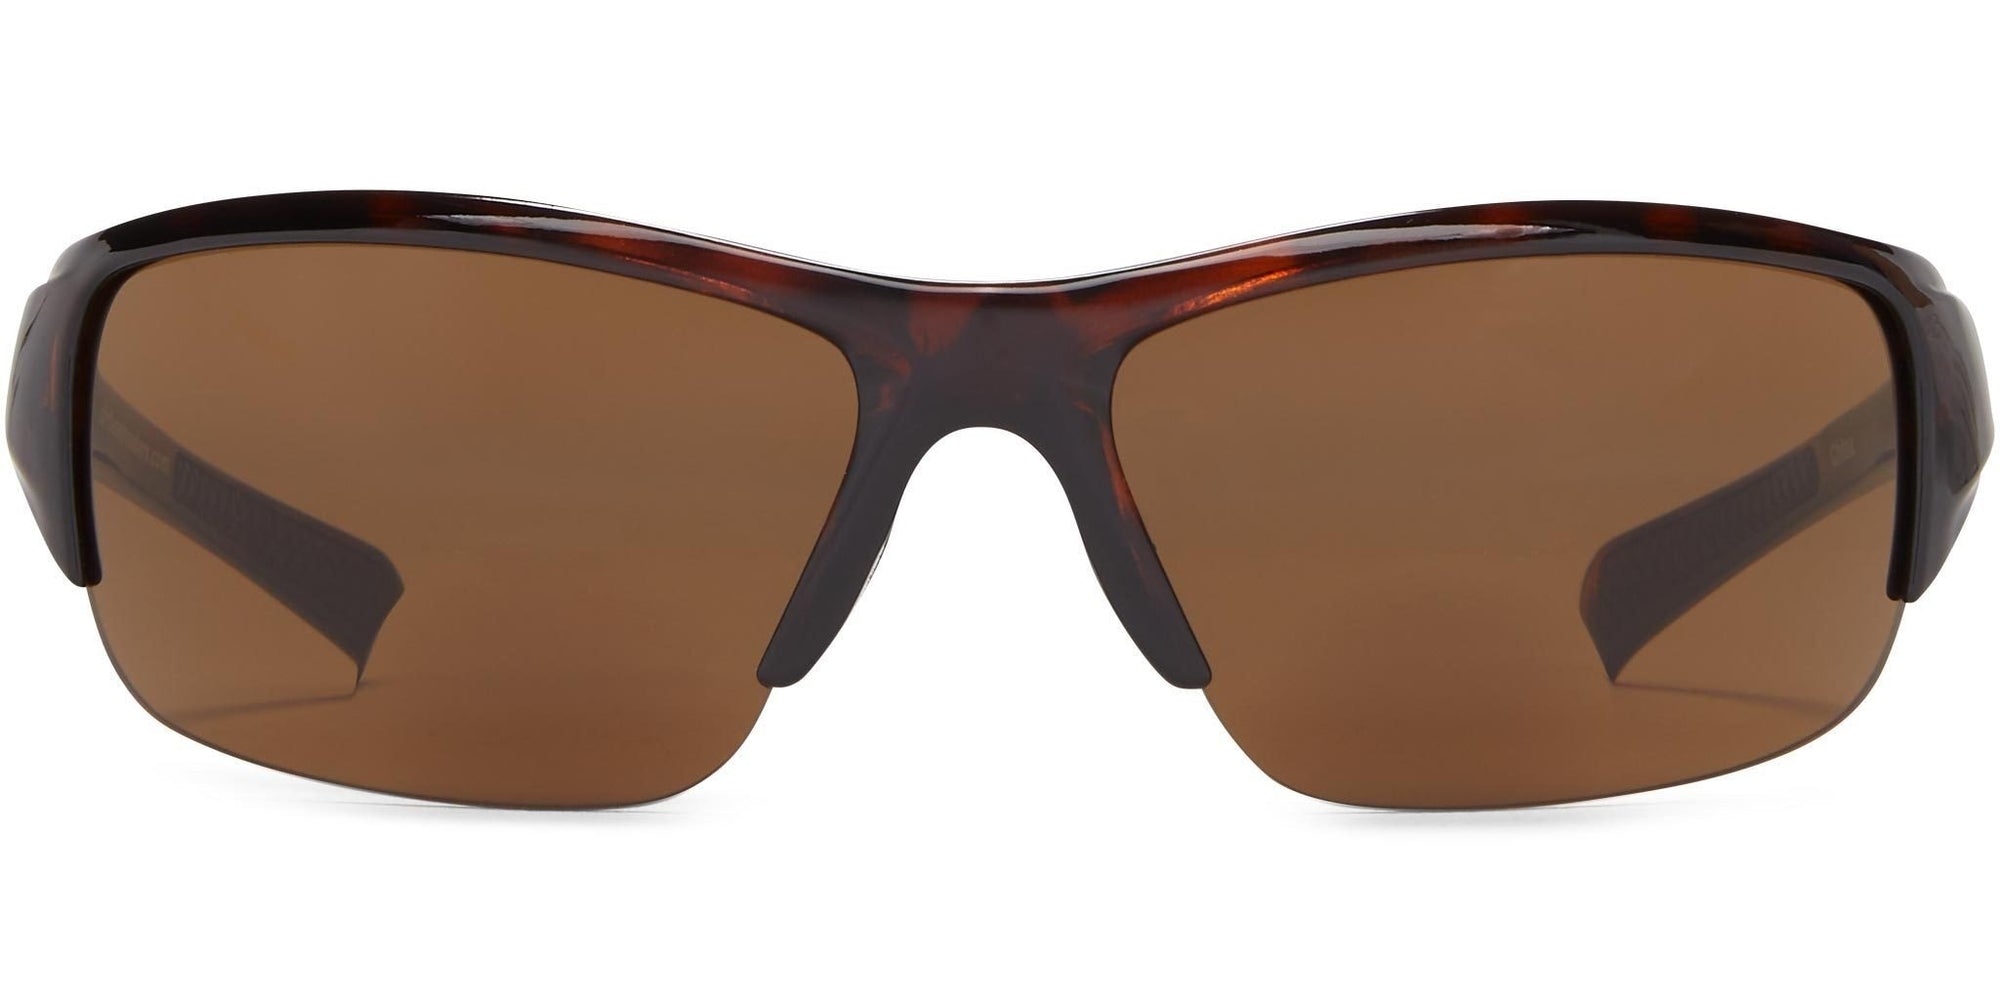 Rocklin - Brown / 1.25 - Reading Sunglasses